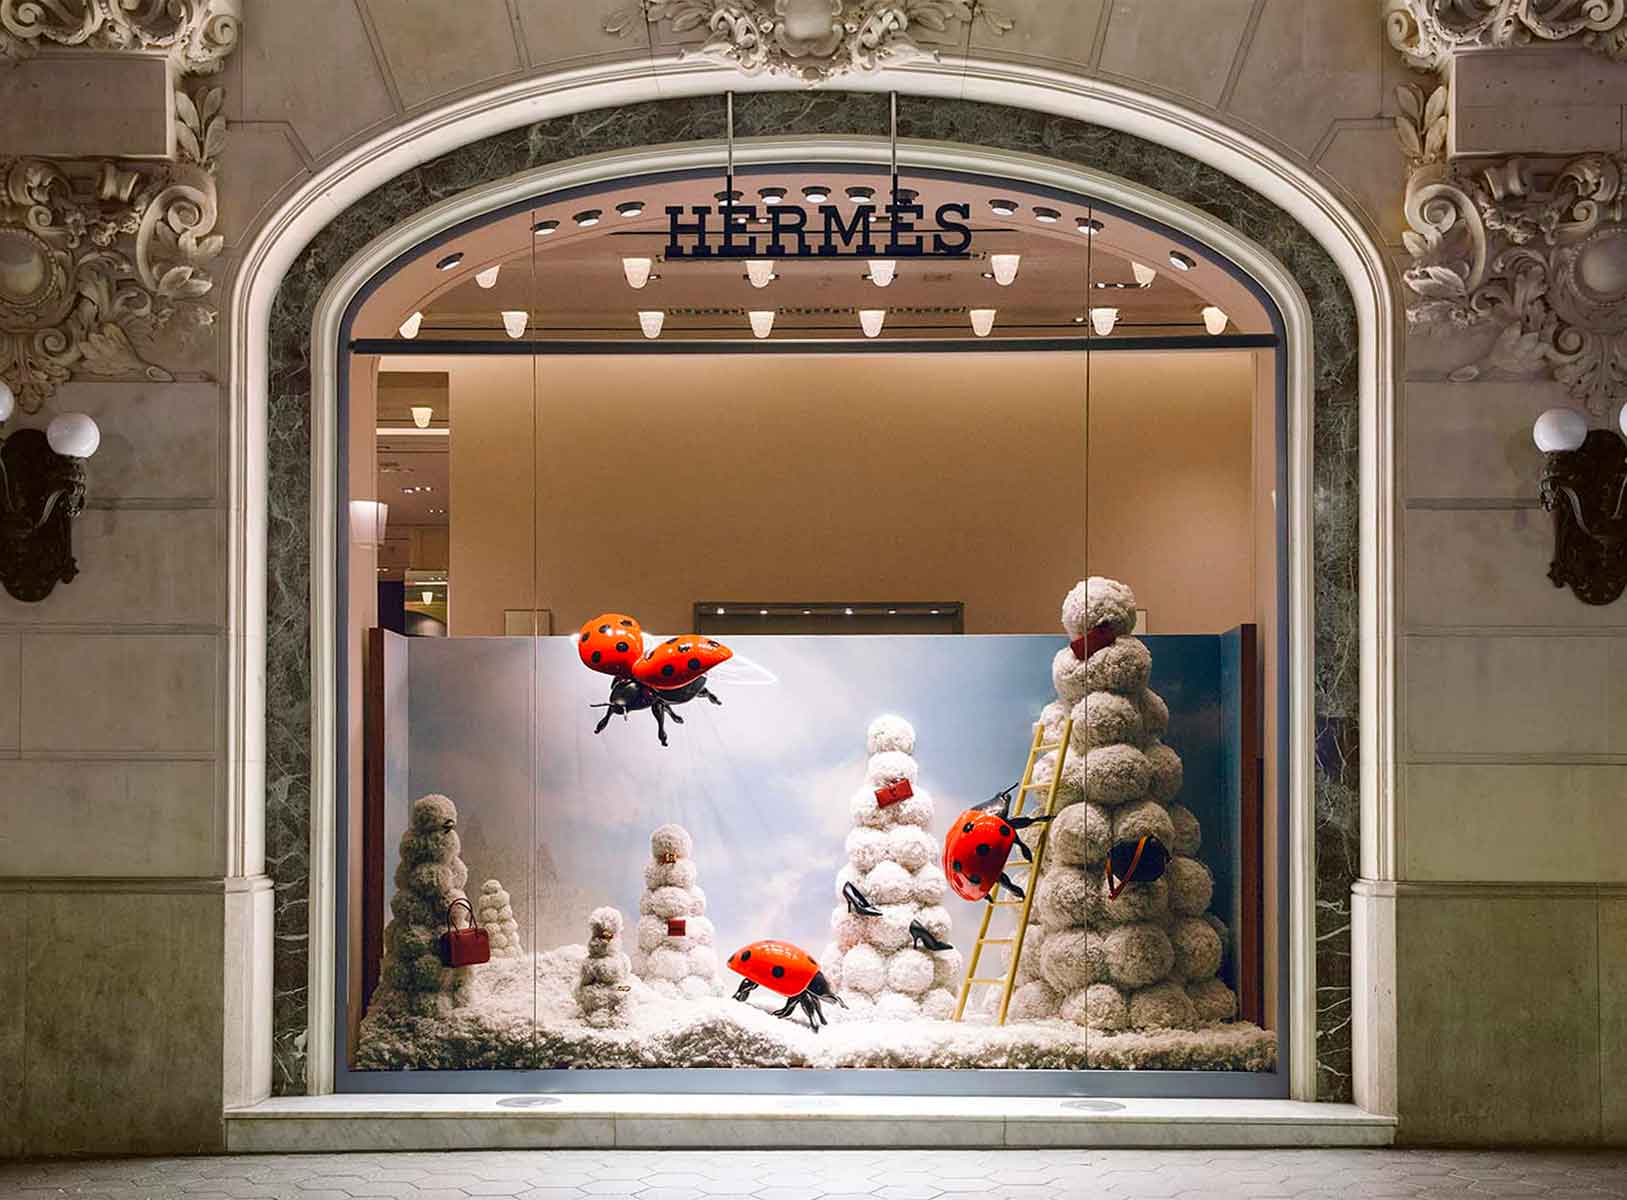 Escaparates de Navidad Hermès España, decoración con árboles de porexpan